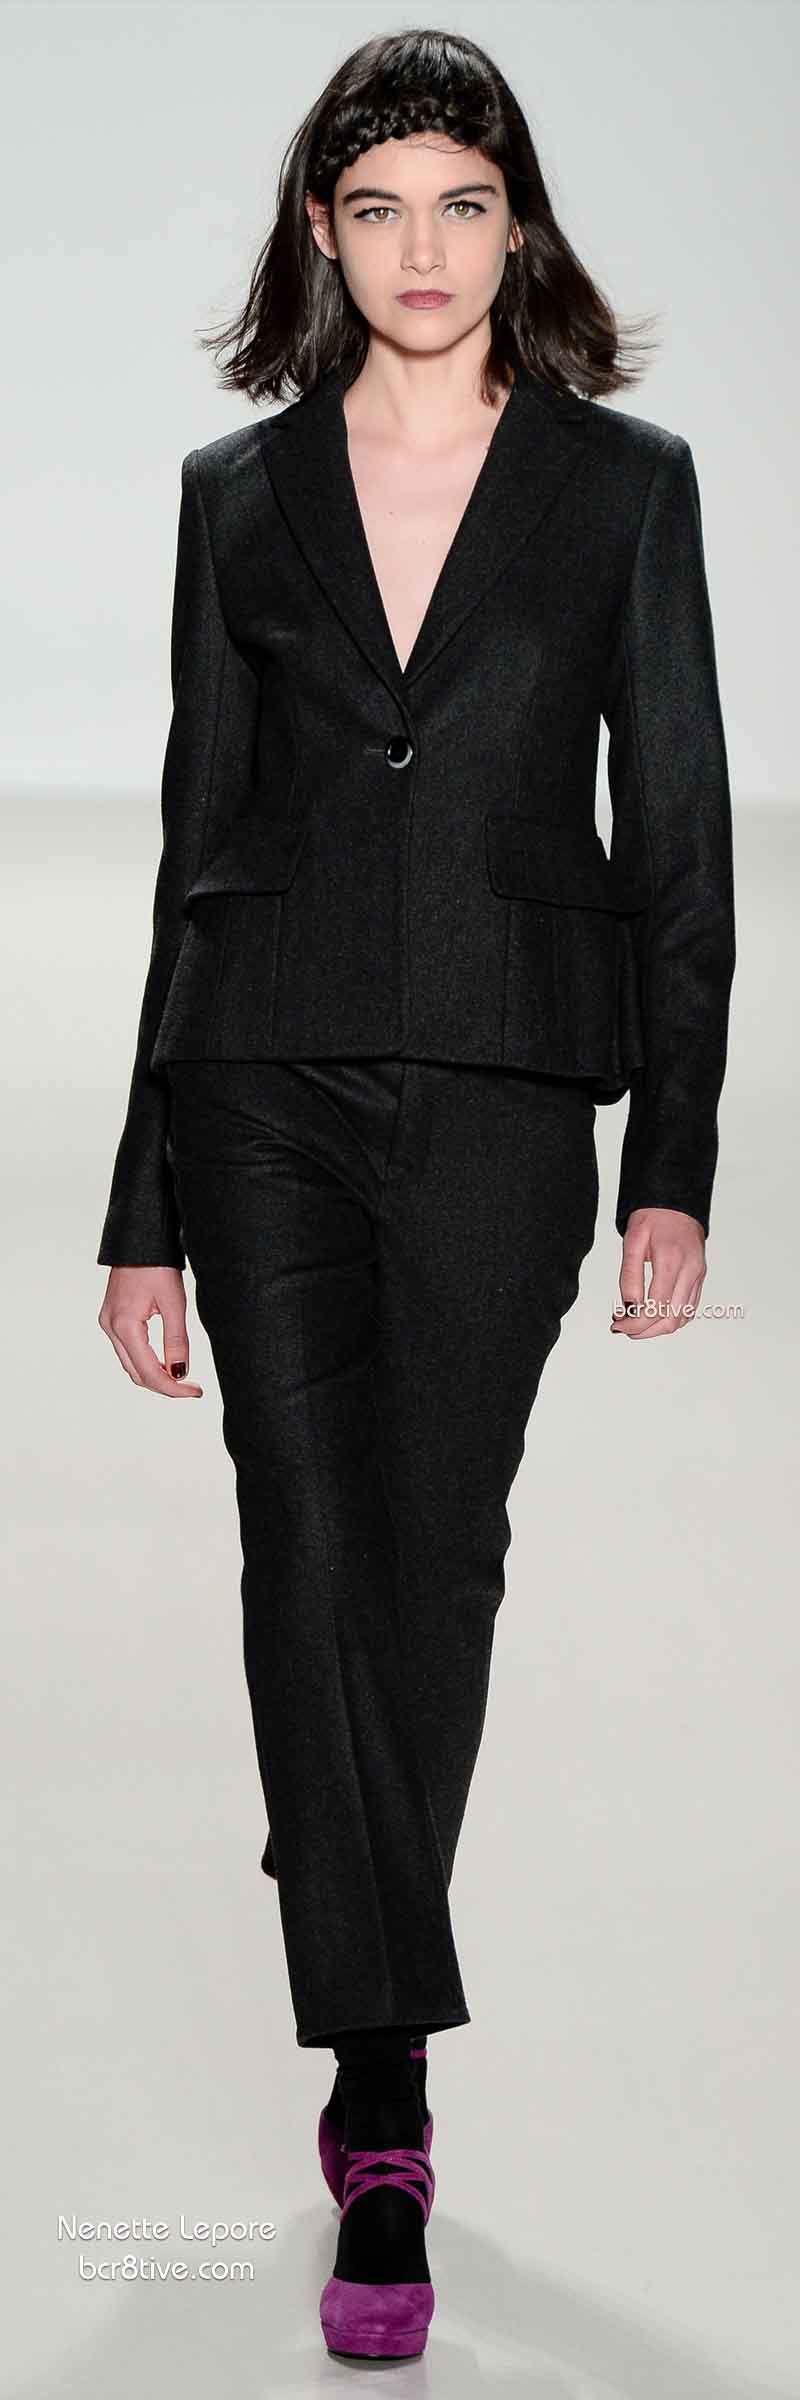 Fall 2014 Menswear Inspired Fashion - Nenette Lepore